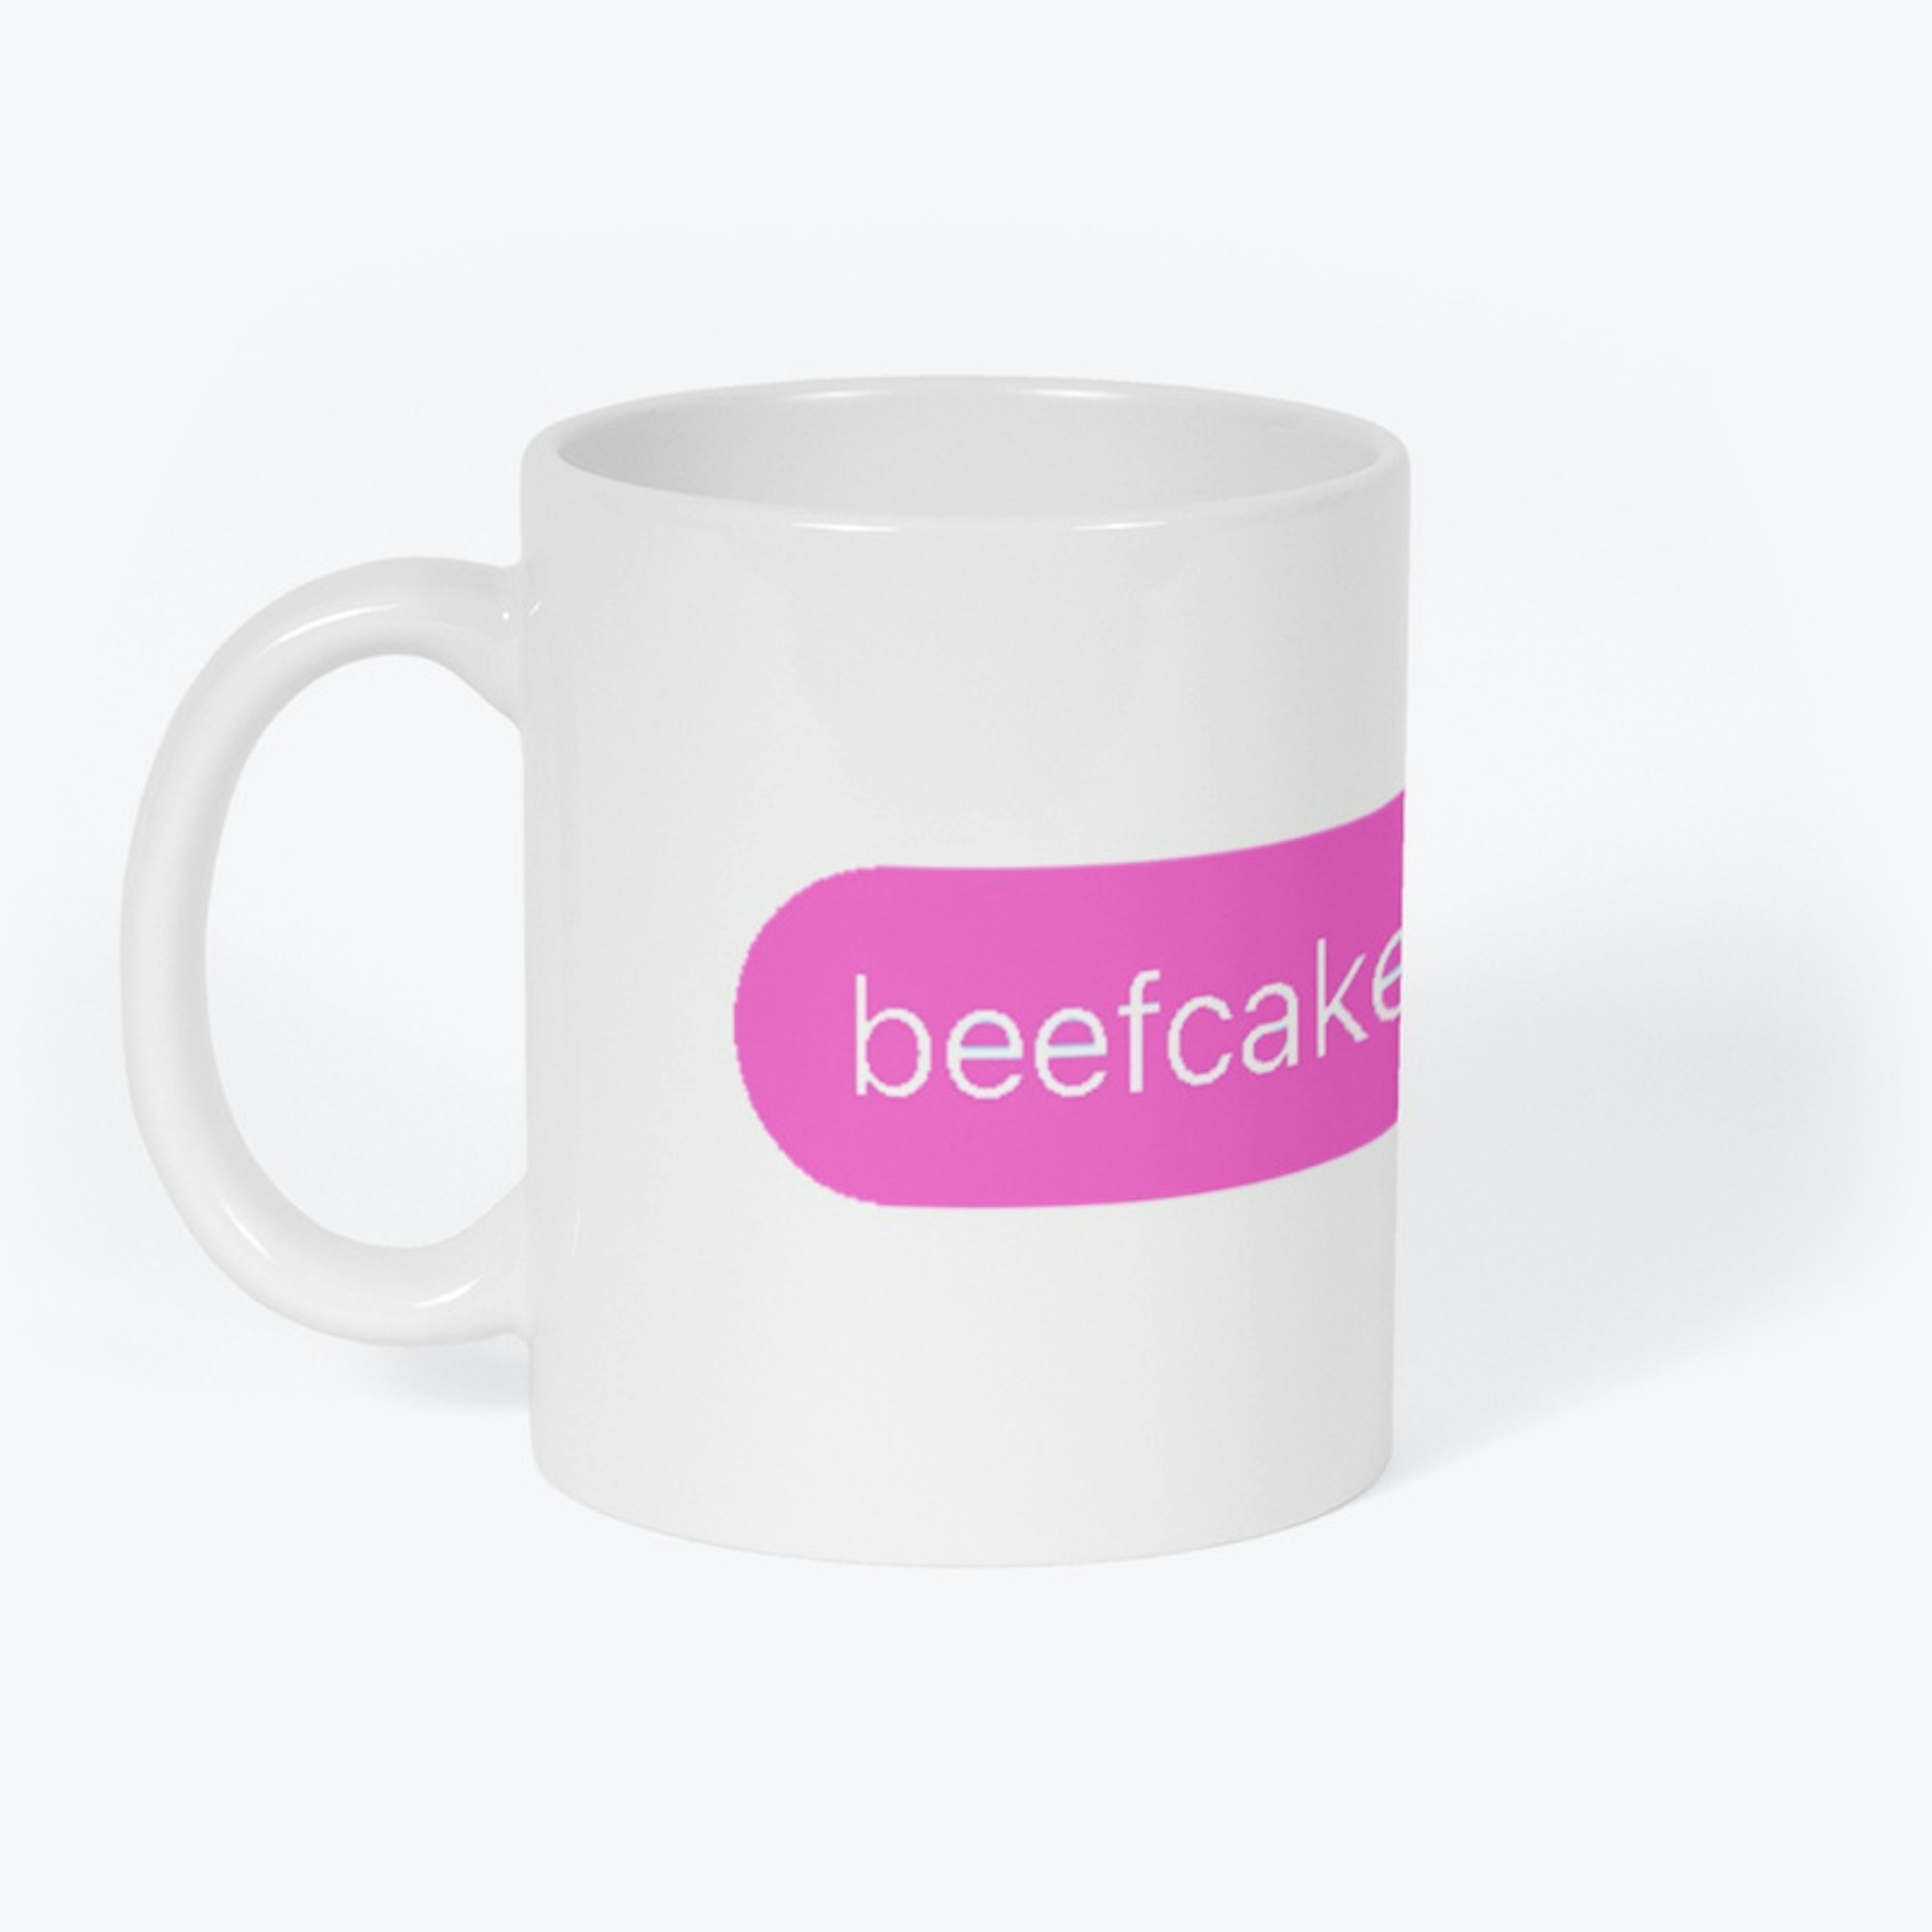 "beefcake." - DESIGN